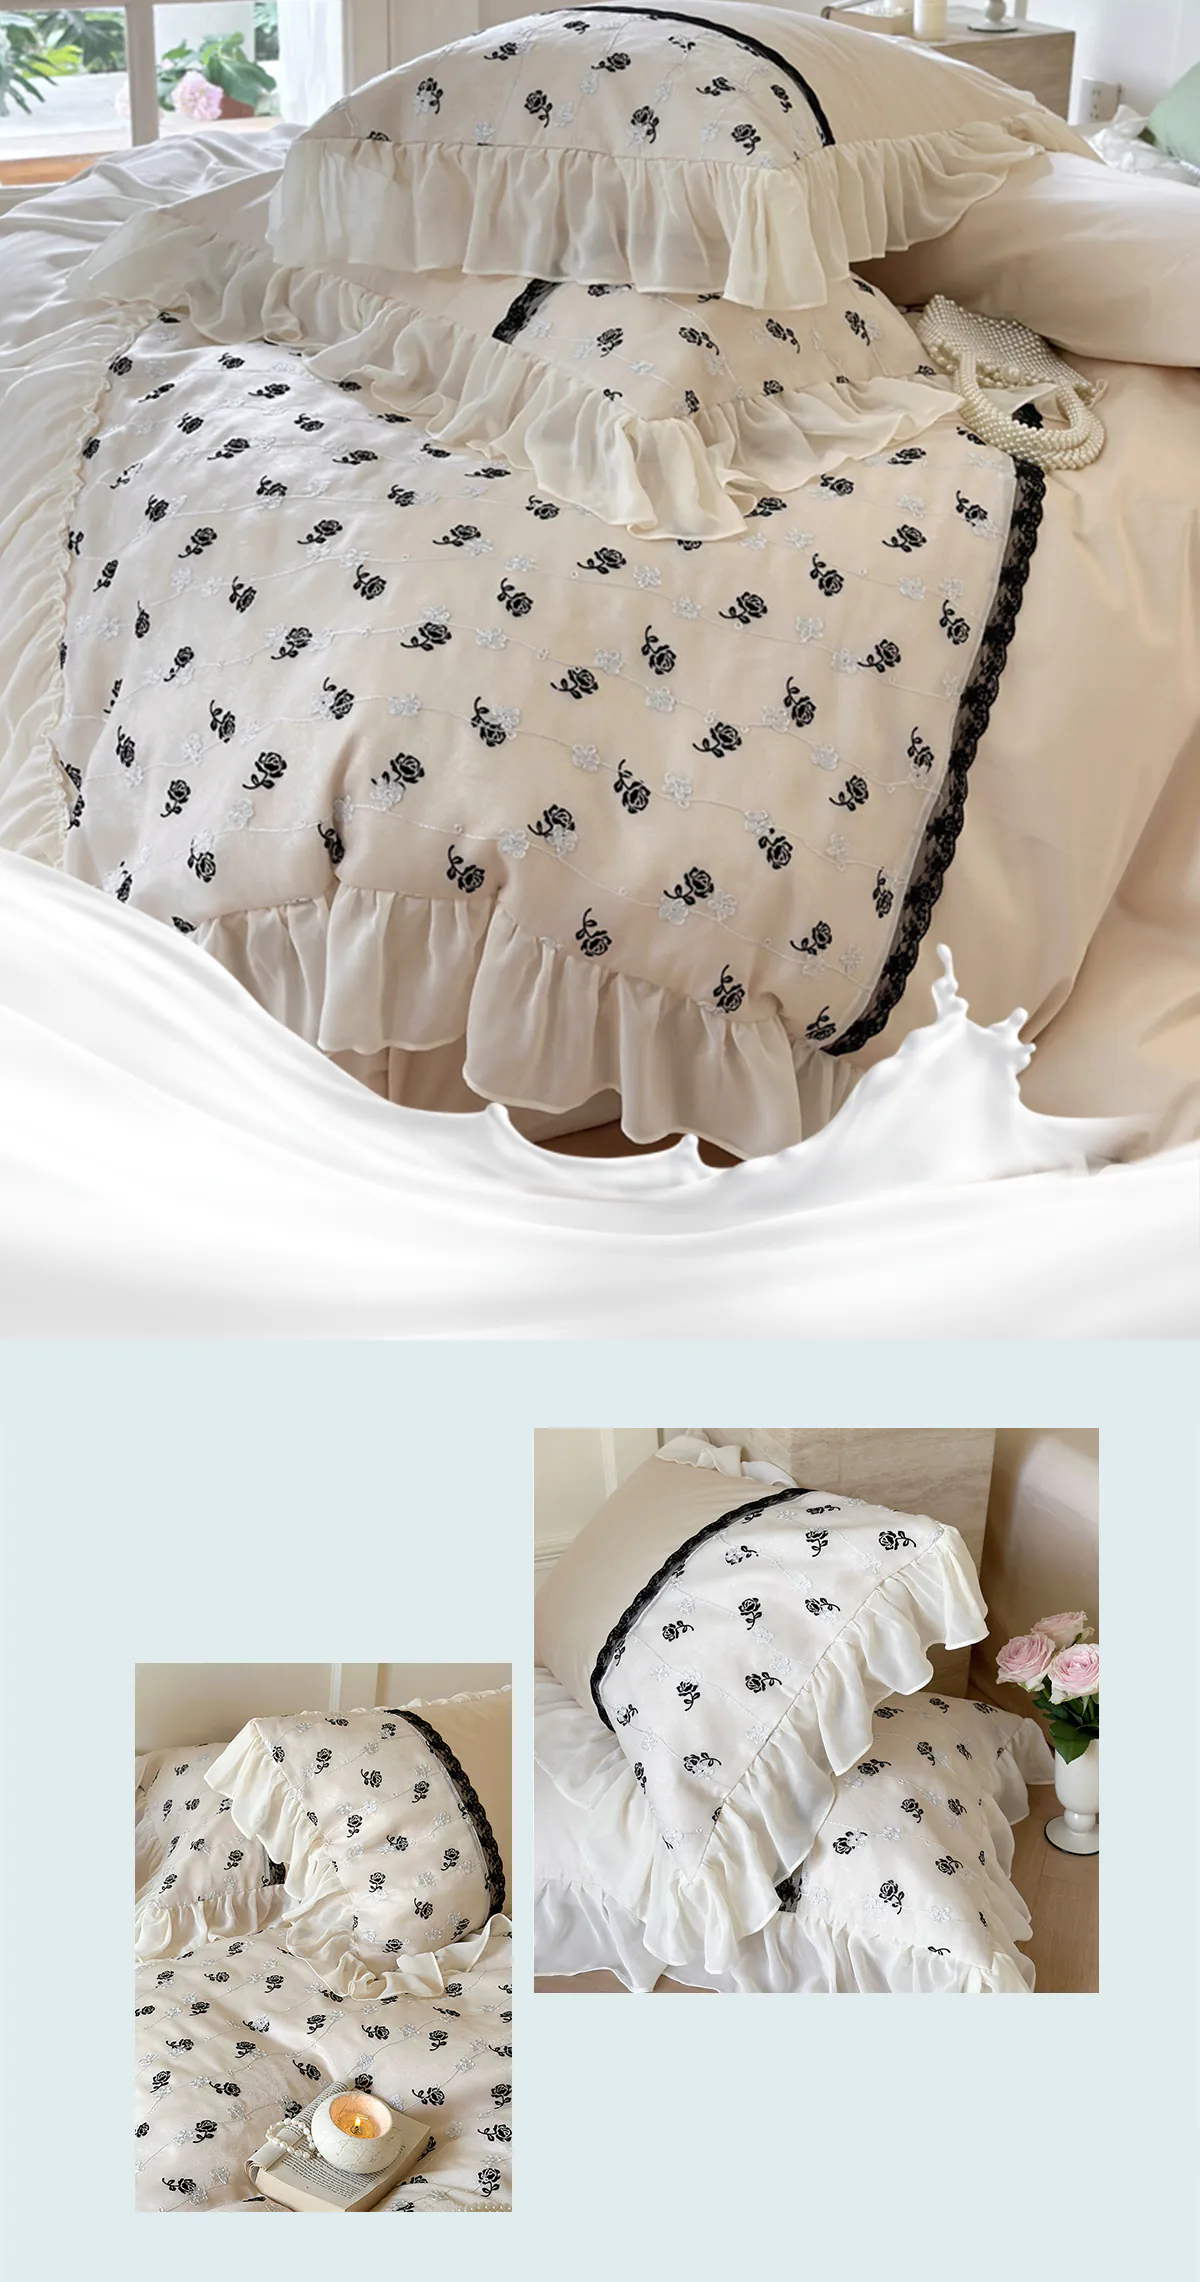 Cozy-Princess-Style-Egyptian-Cotton-Duvet-Cover-Bedding-4-Pcs-Set17